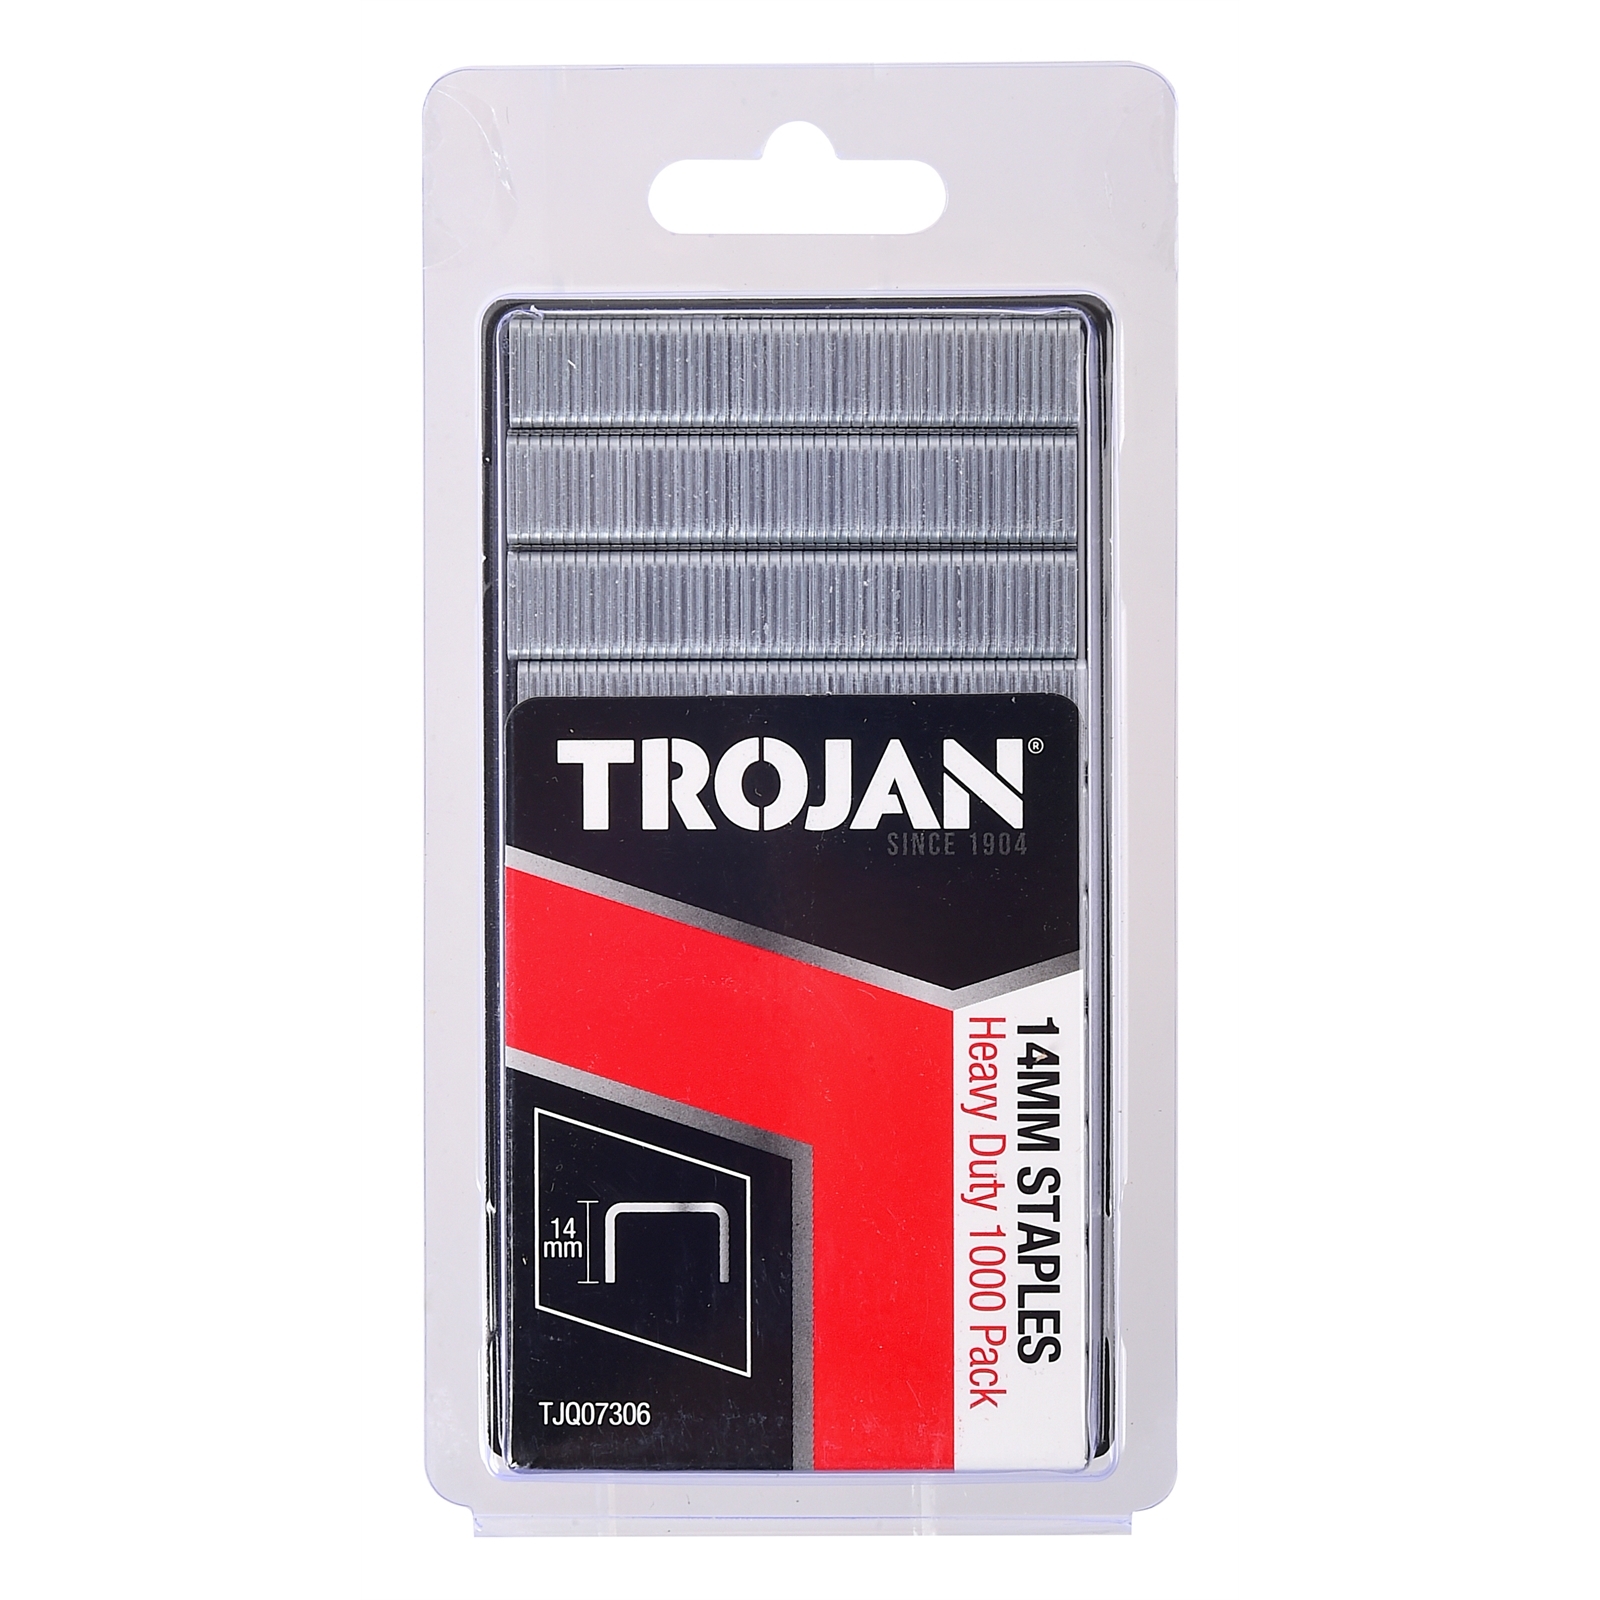 Trojan 14mm Heavy Duty Staples - 1000 Pack